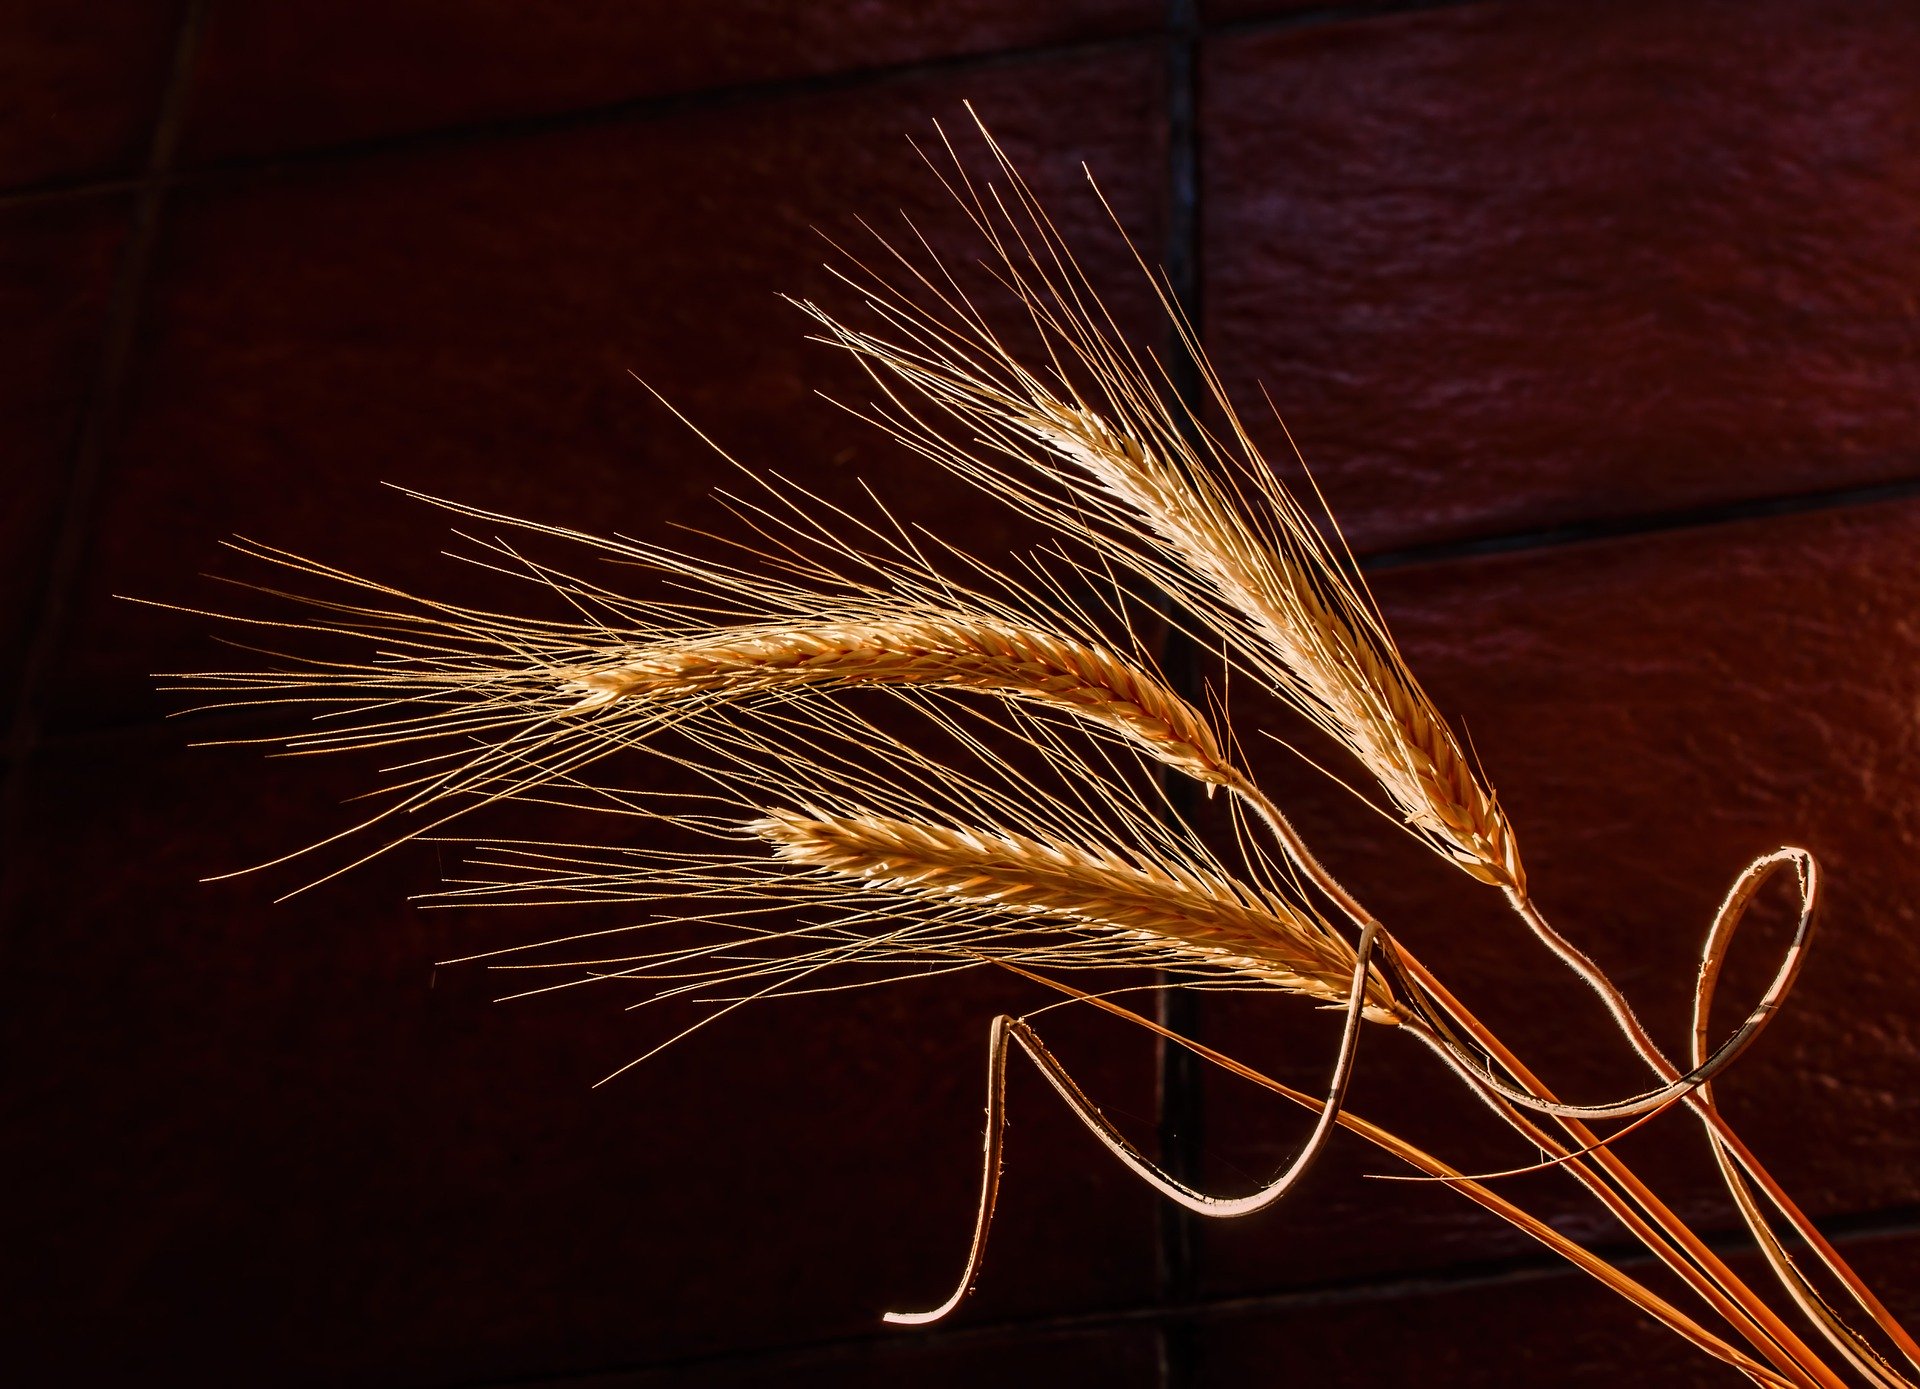 Barley - Image by Steve Buissinne (Pixabay)